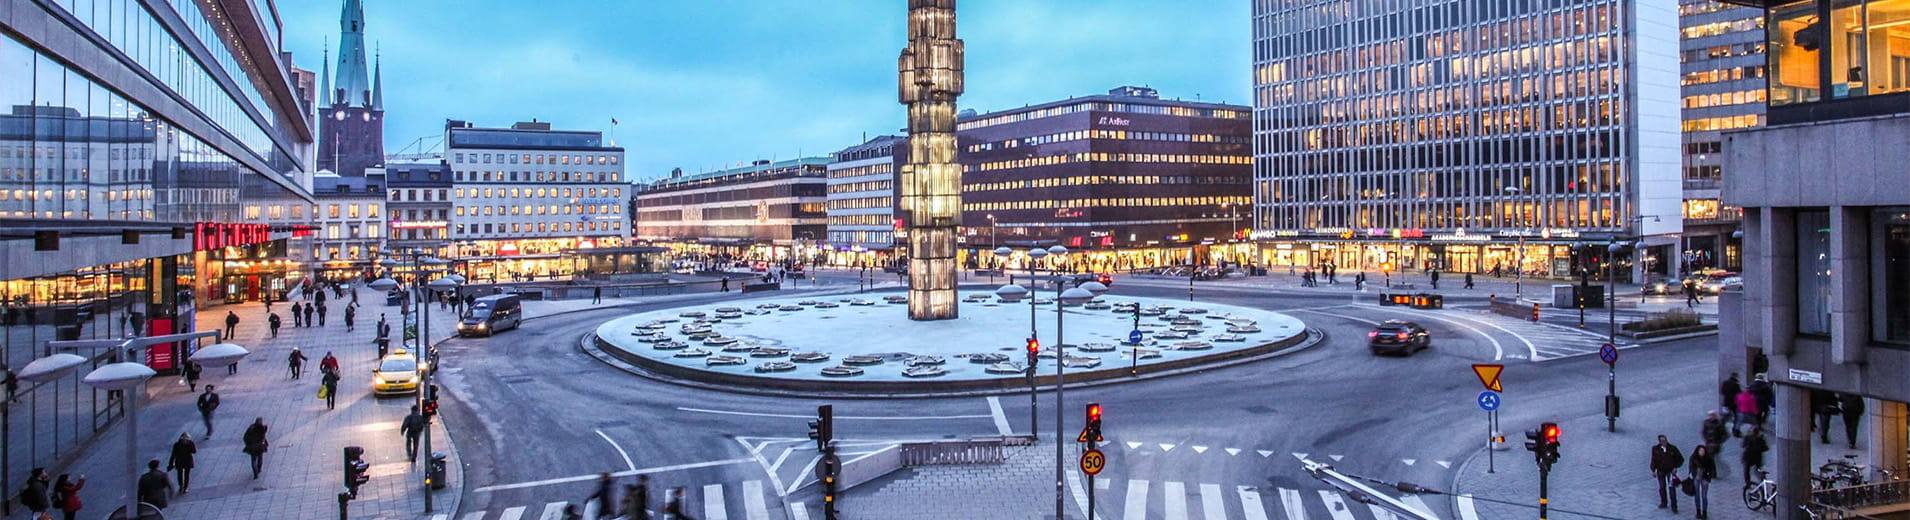 Stockholm 0261